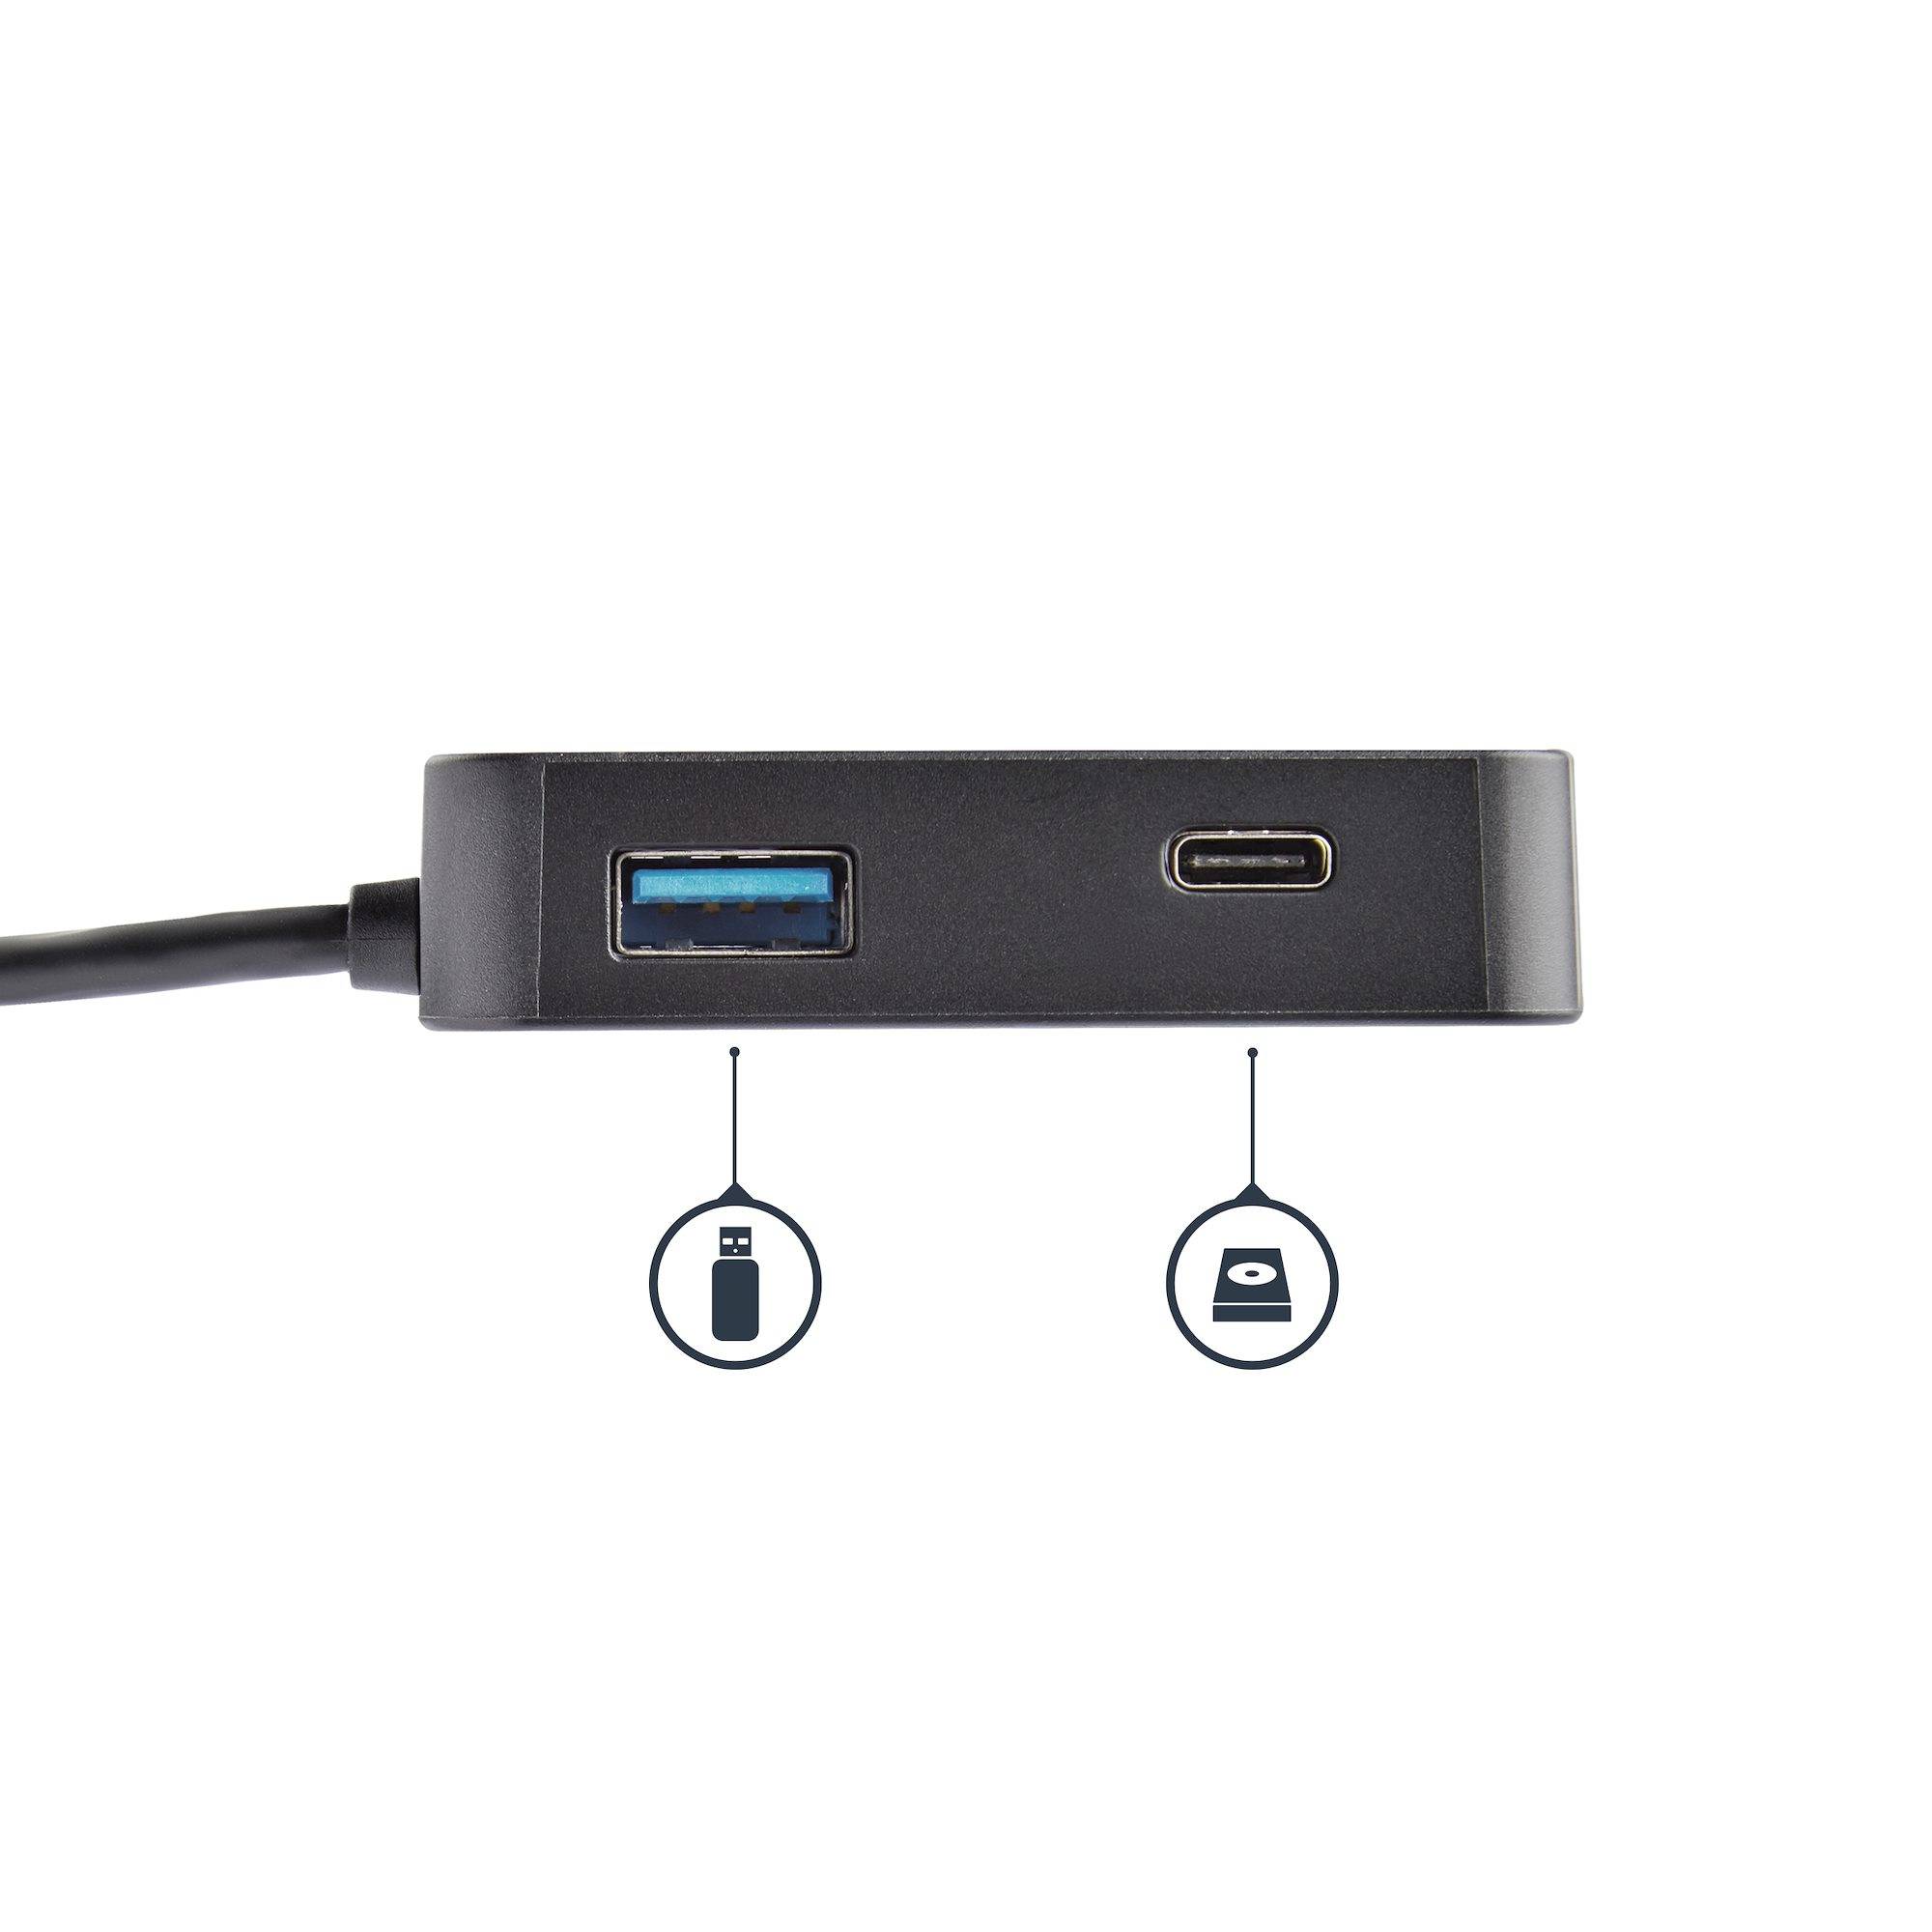 Rca Informatique - image du produit : USB-C MULTIPORT ADAPTER - WITH 4K HDMI GBE USB-C USB-A PORTS